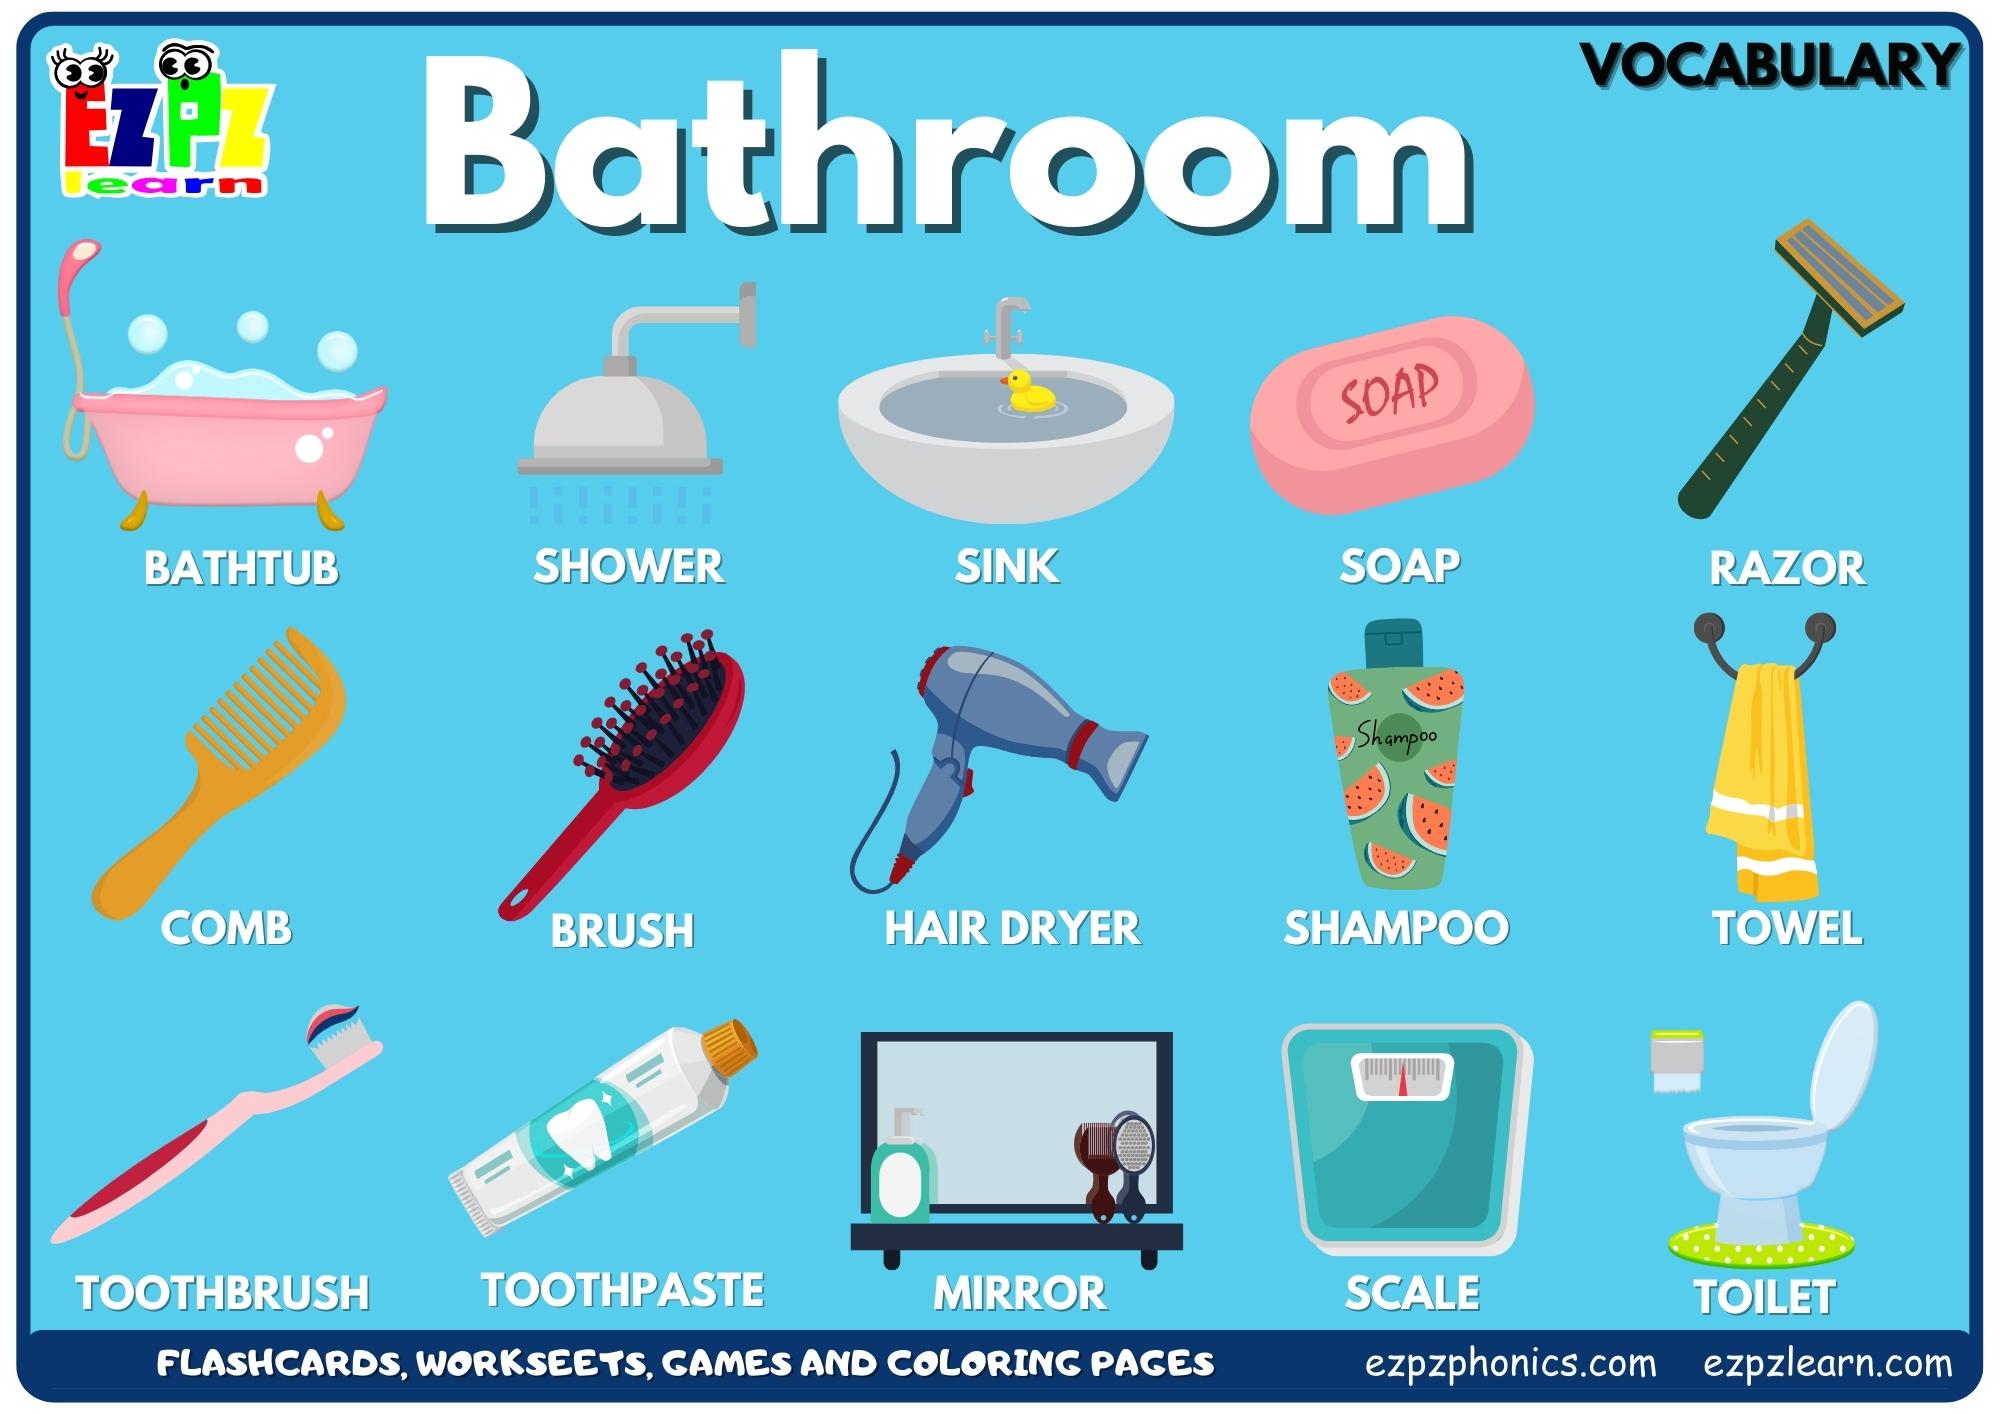 Bathroom Items List Picture Vocabulary  Bathroom items, Vocabulary,  Flashcards